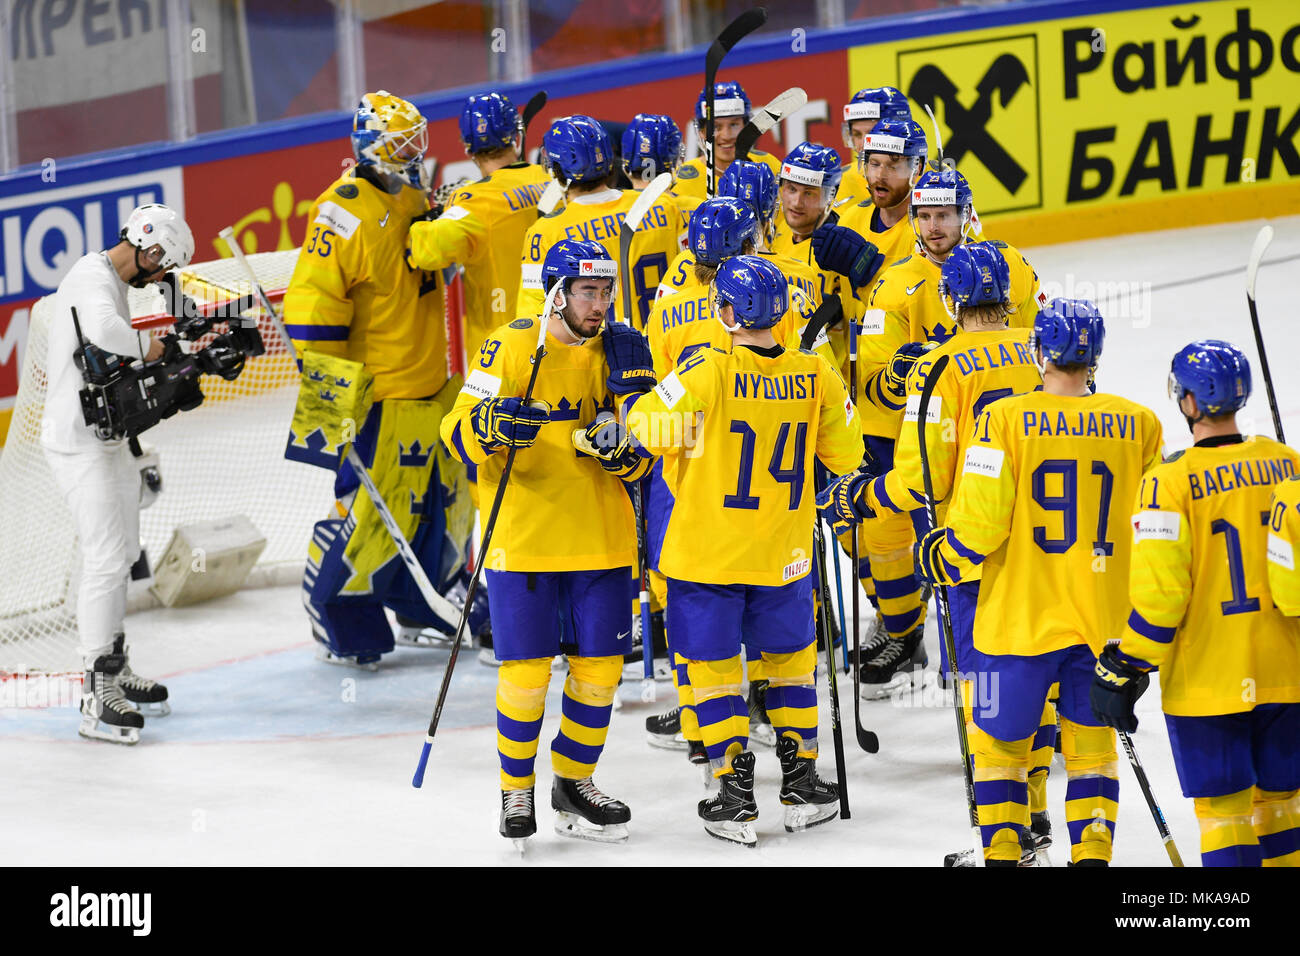 swedish national hockey team jersey